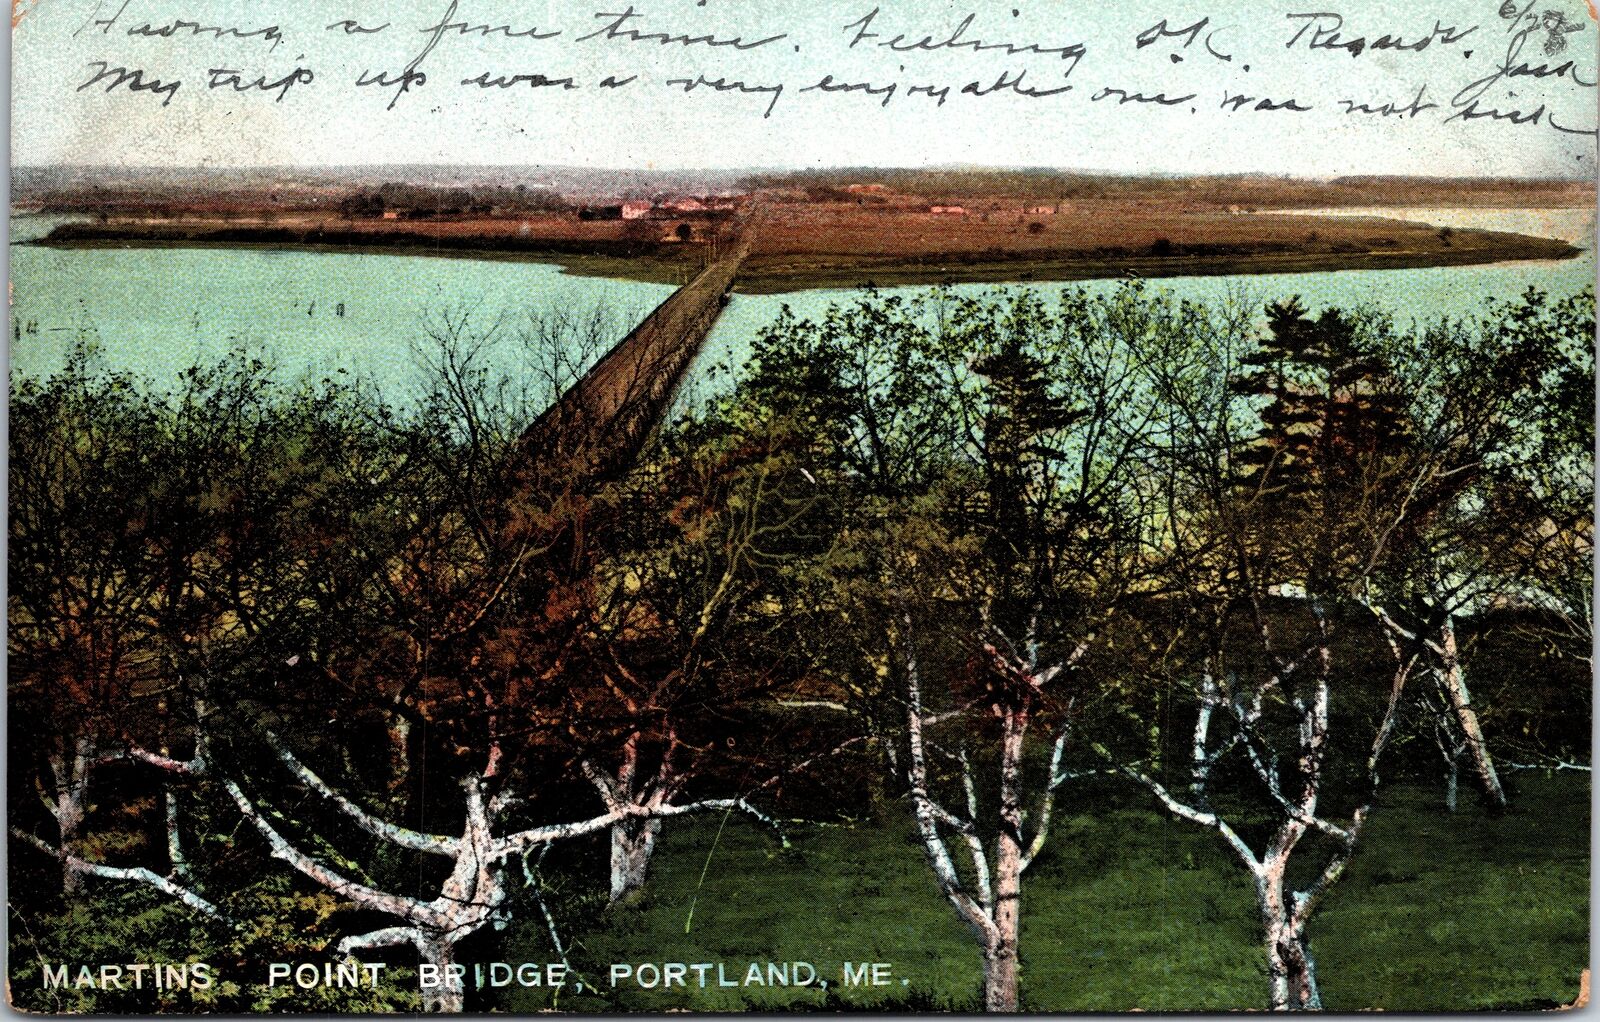 VINTAGE POSTCARD MID-AERIAL VIEW OF MARTINS POINT BRIDGE AT PORTLAND MAINE 1907